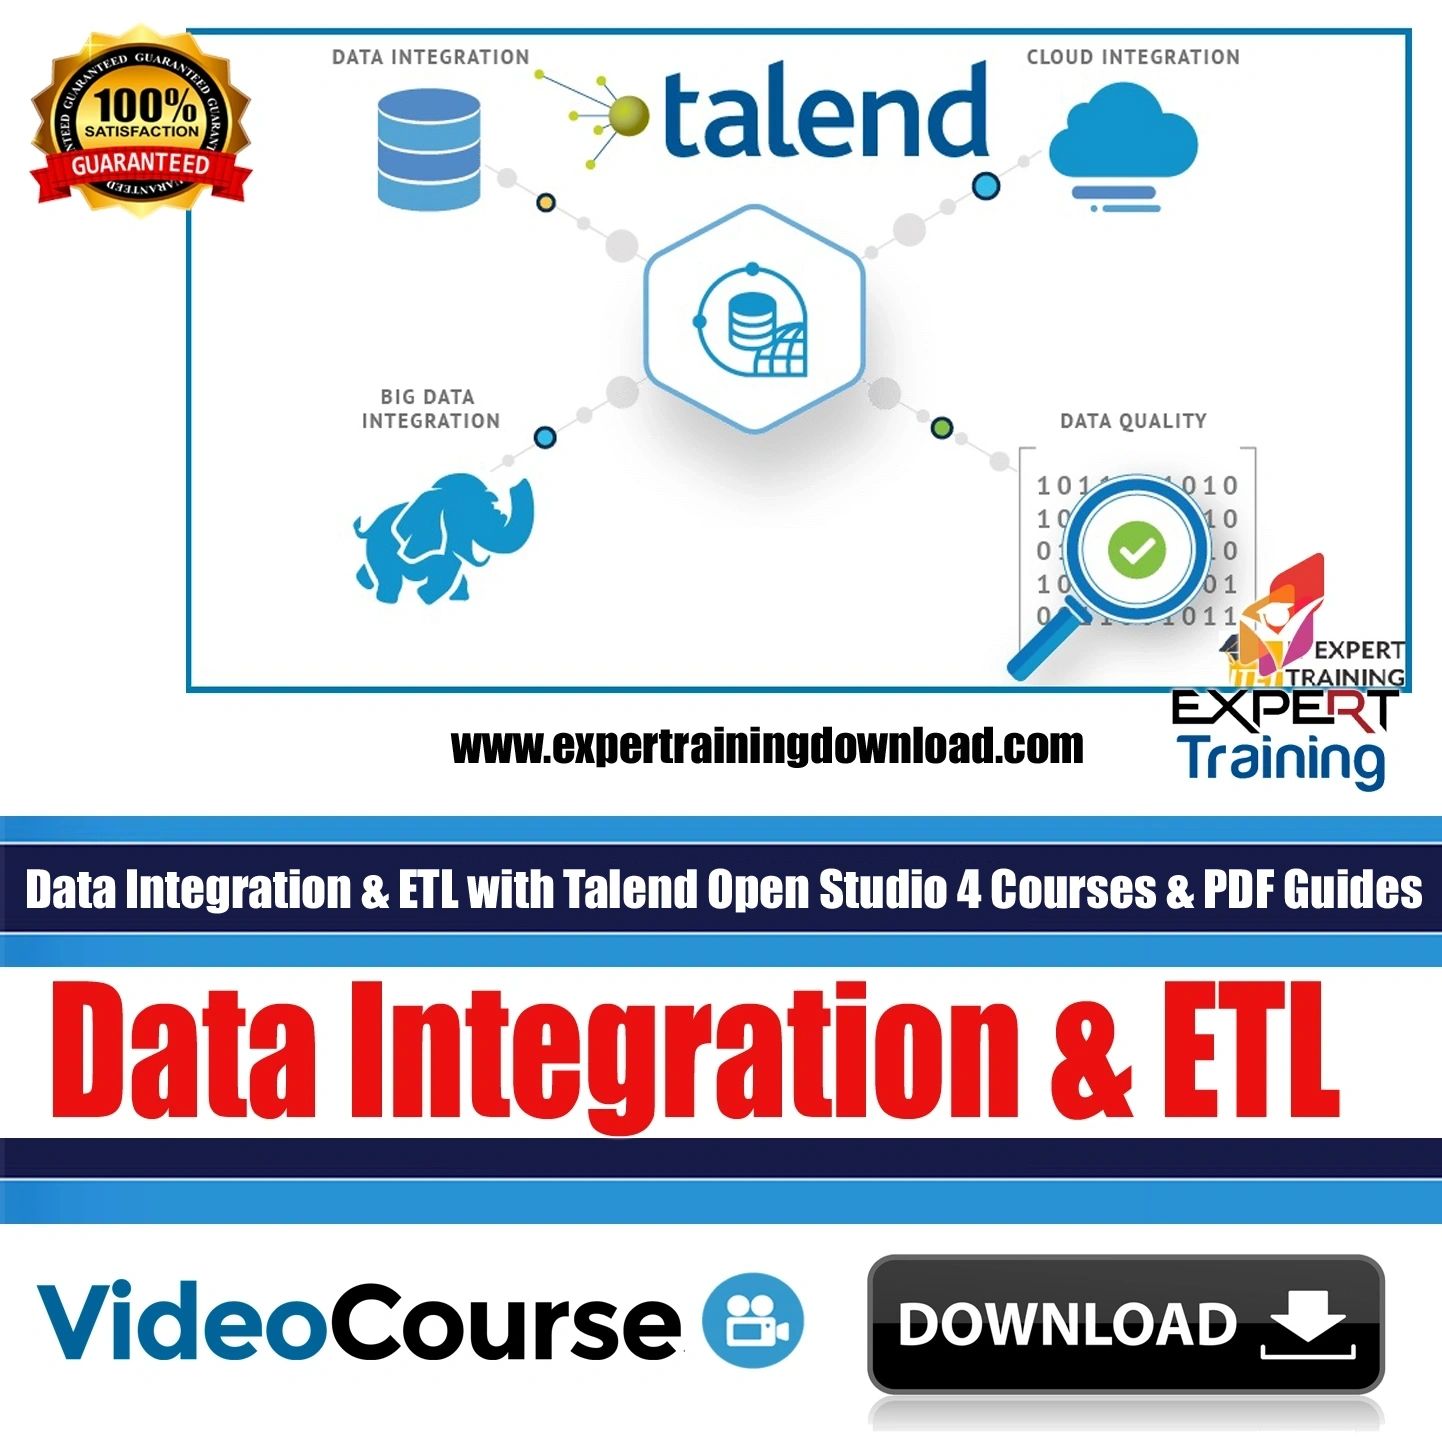 Data Integration & ETL with Talend Open Studio 4 Courses & PDF Guides